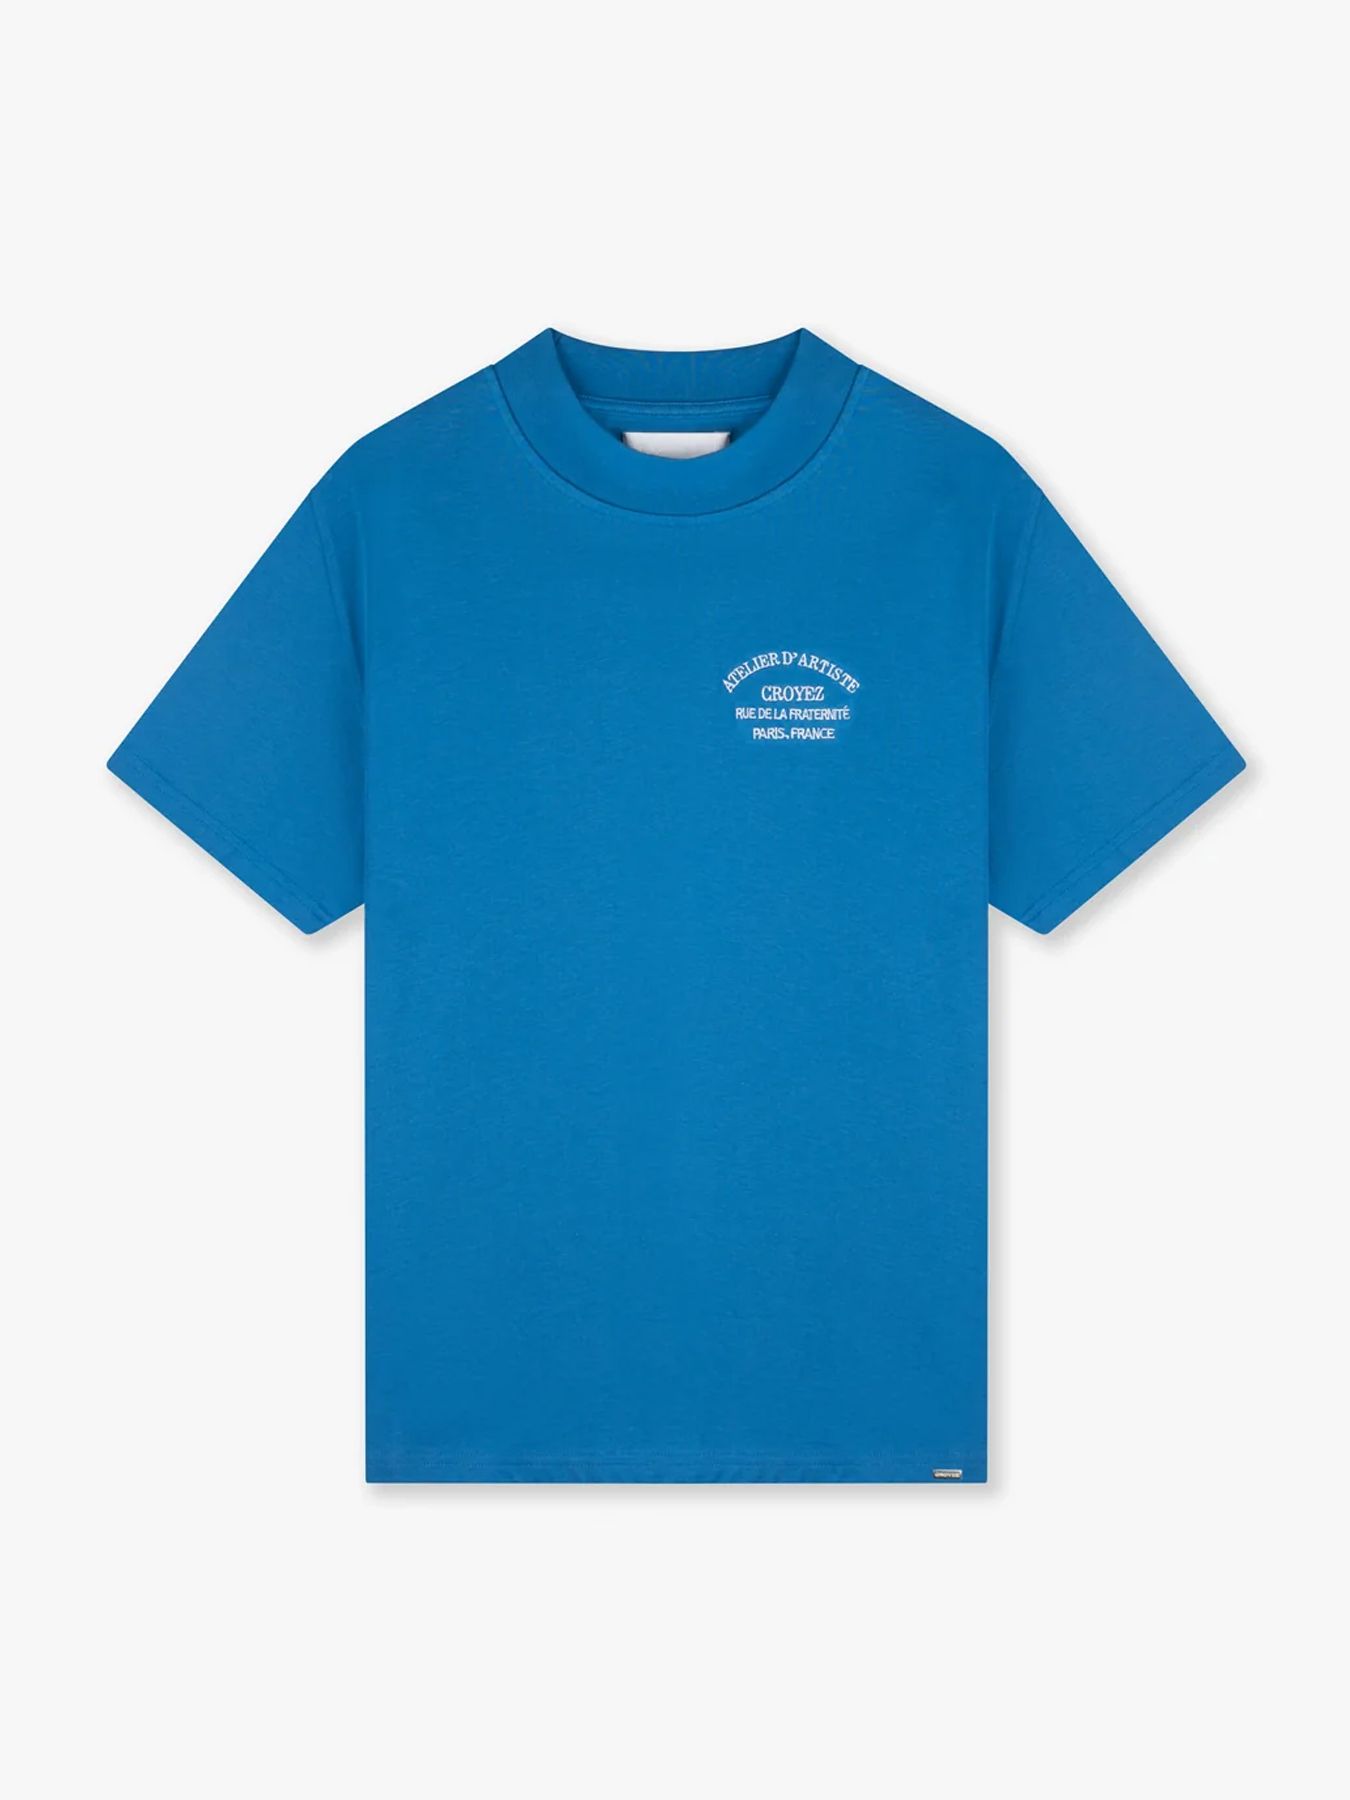 Croyez Atelier t-shirt Royal Blue 00107485-531